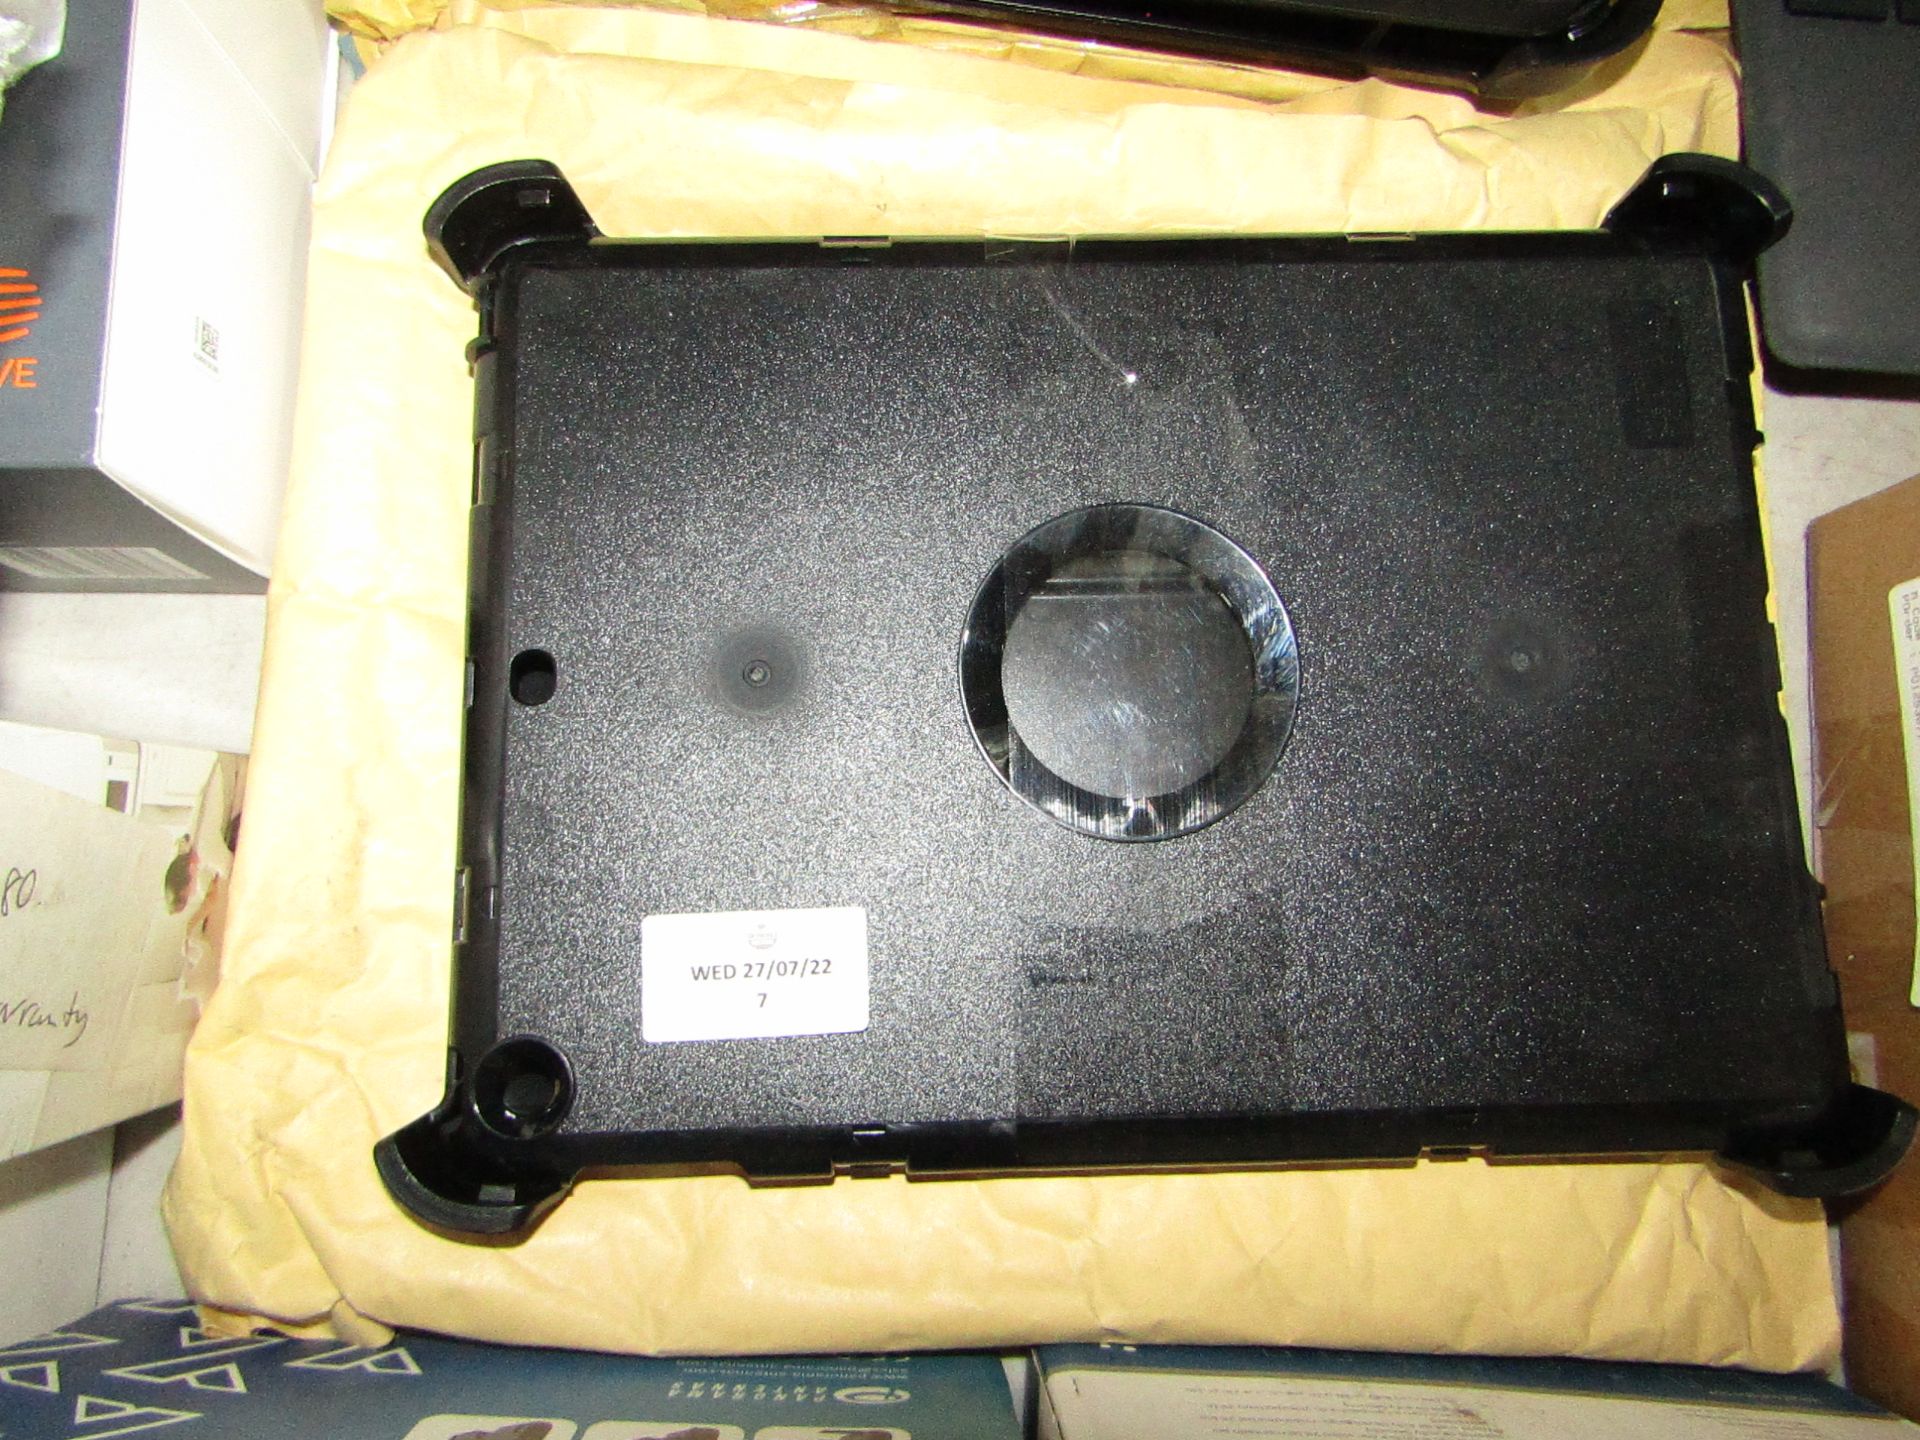 Otterbox - Apple Ipad 5th Gen Defender Case - Black - Non Original Packaging. RRP £32.36